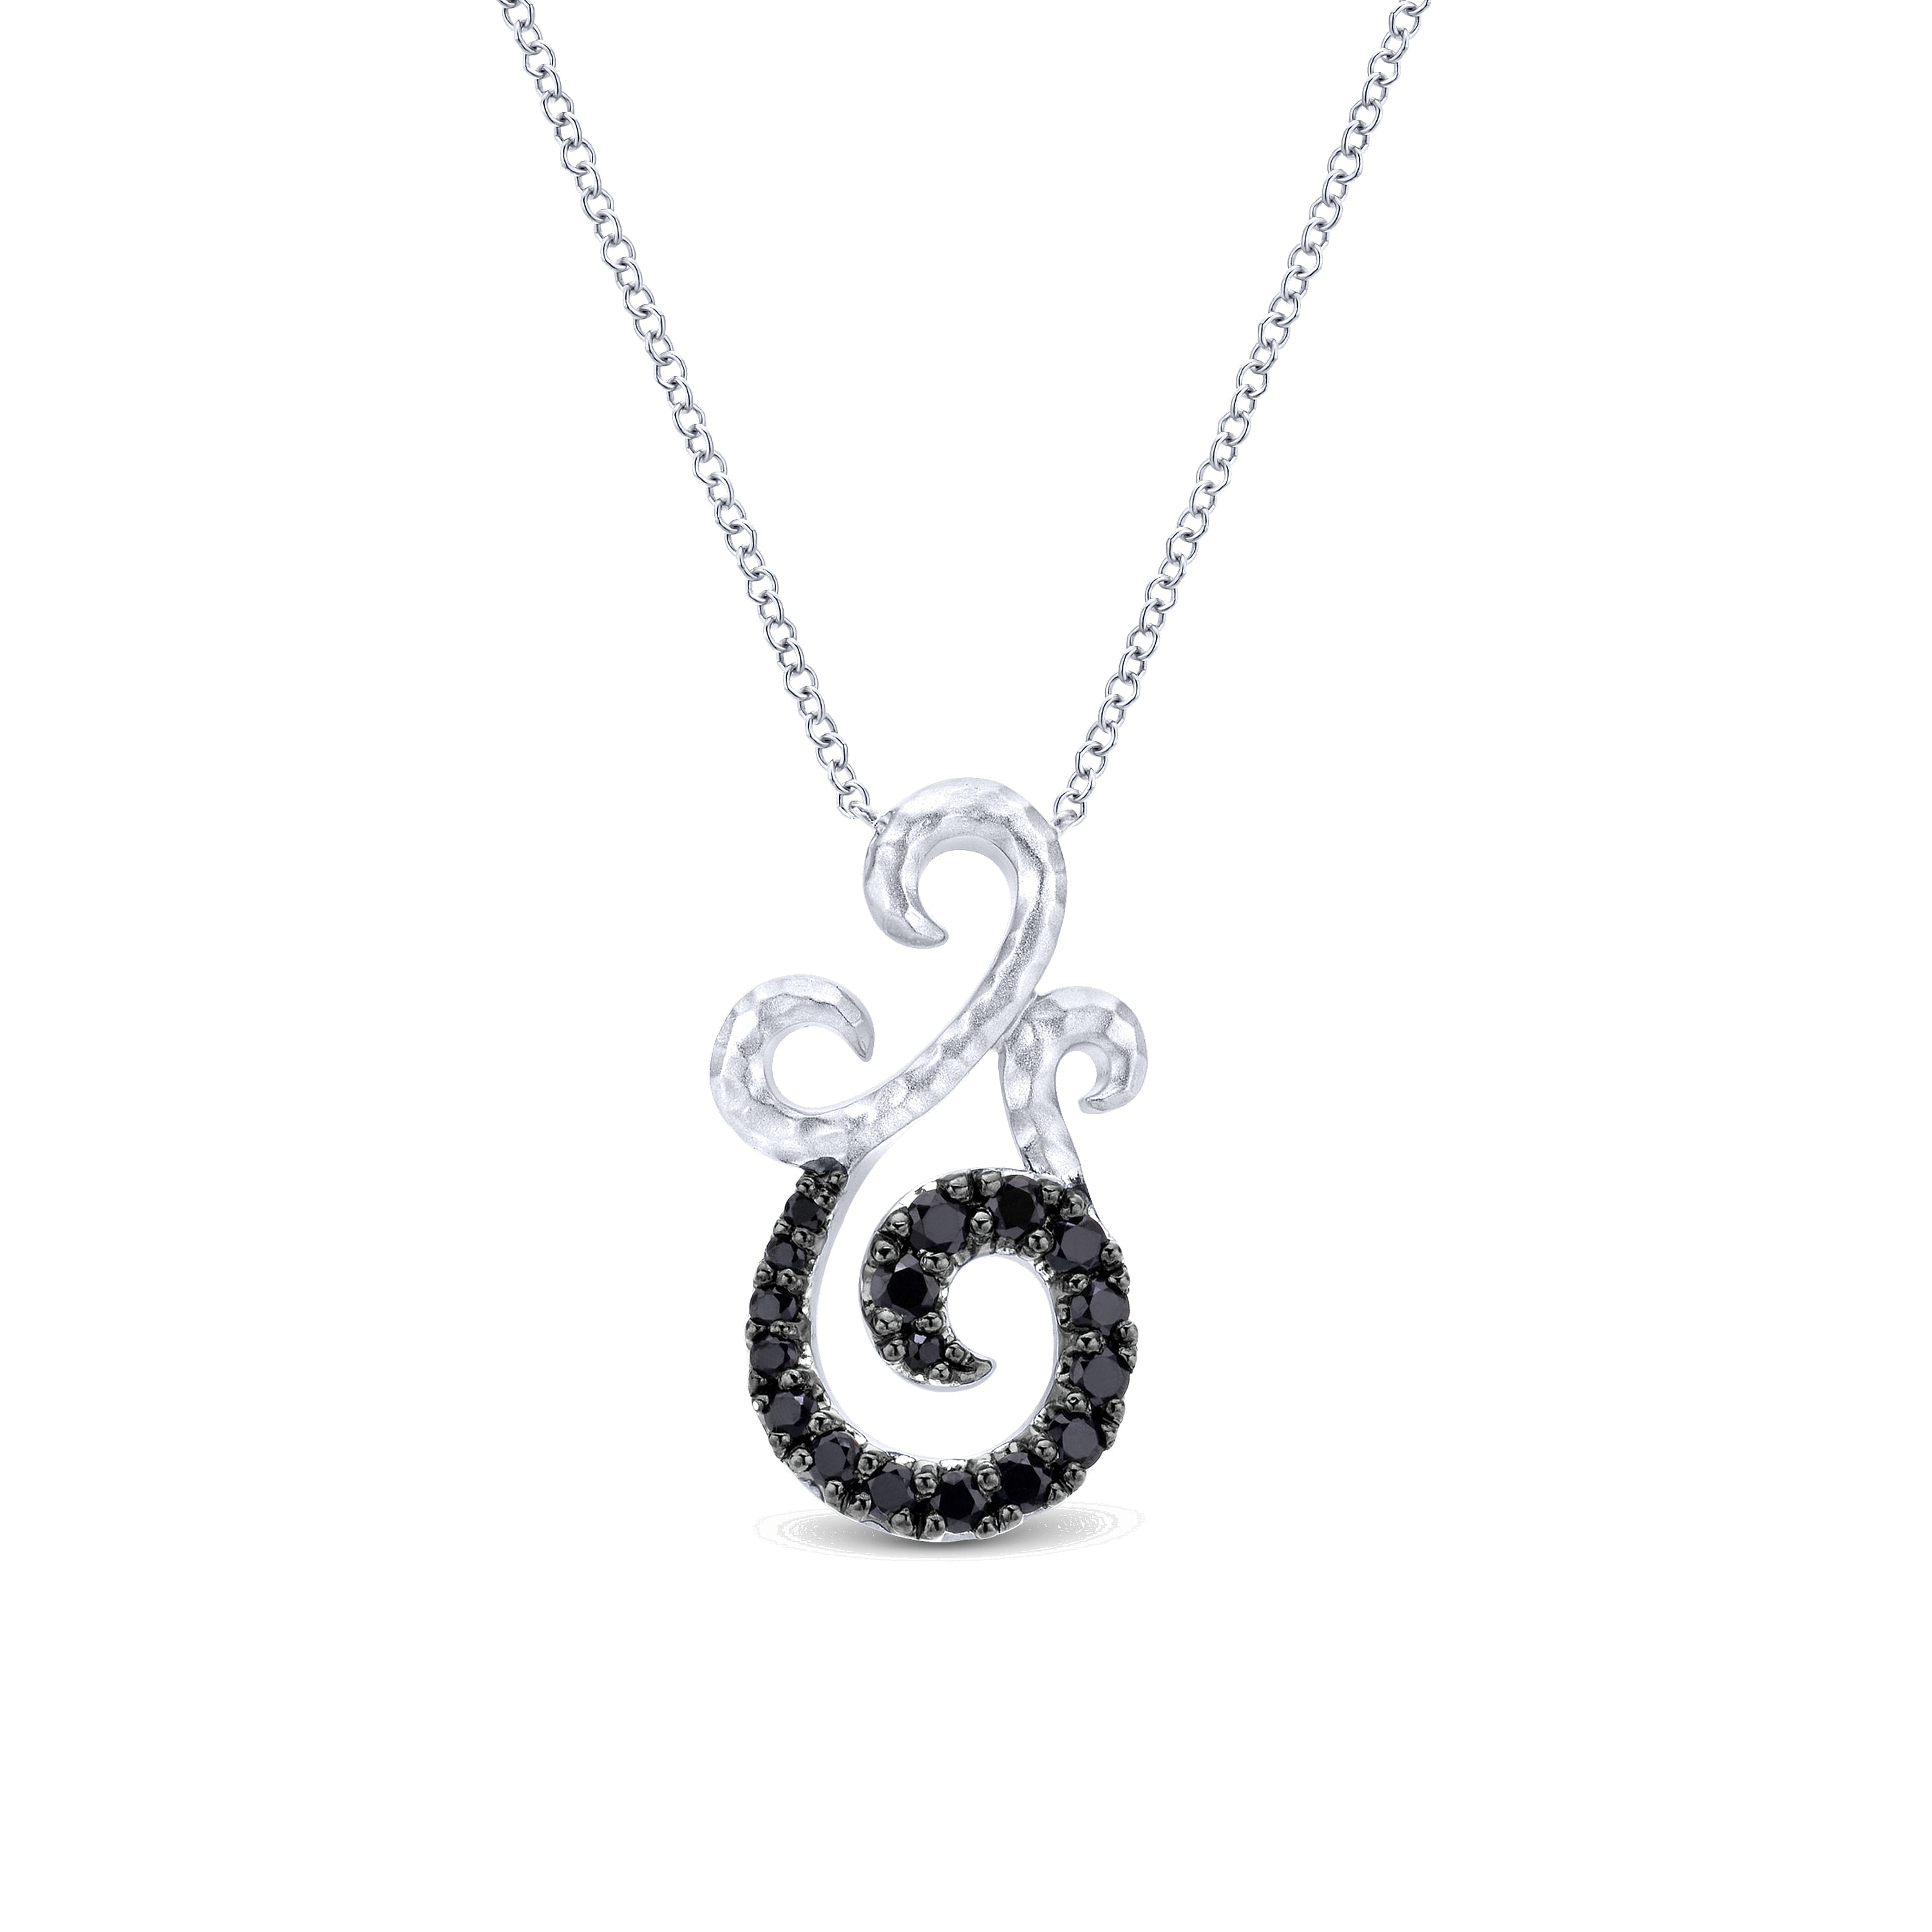 925 Sterling Silver Hammered Twisted Black Spinel Pendant Necklace